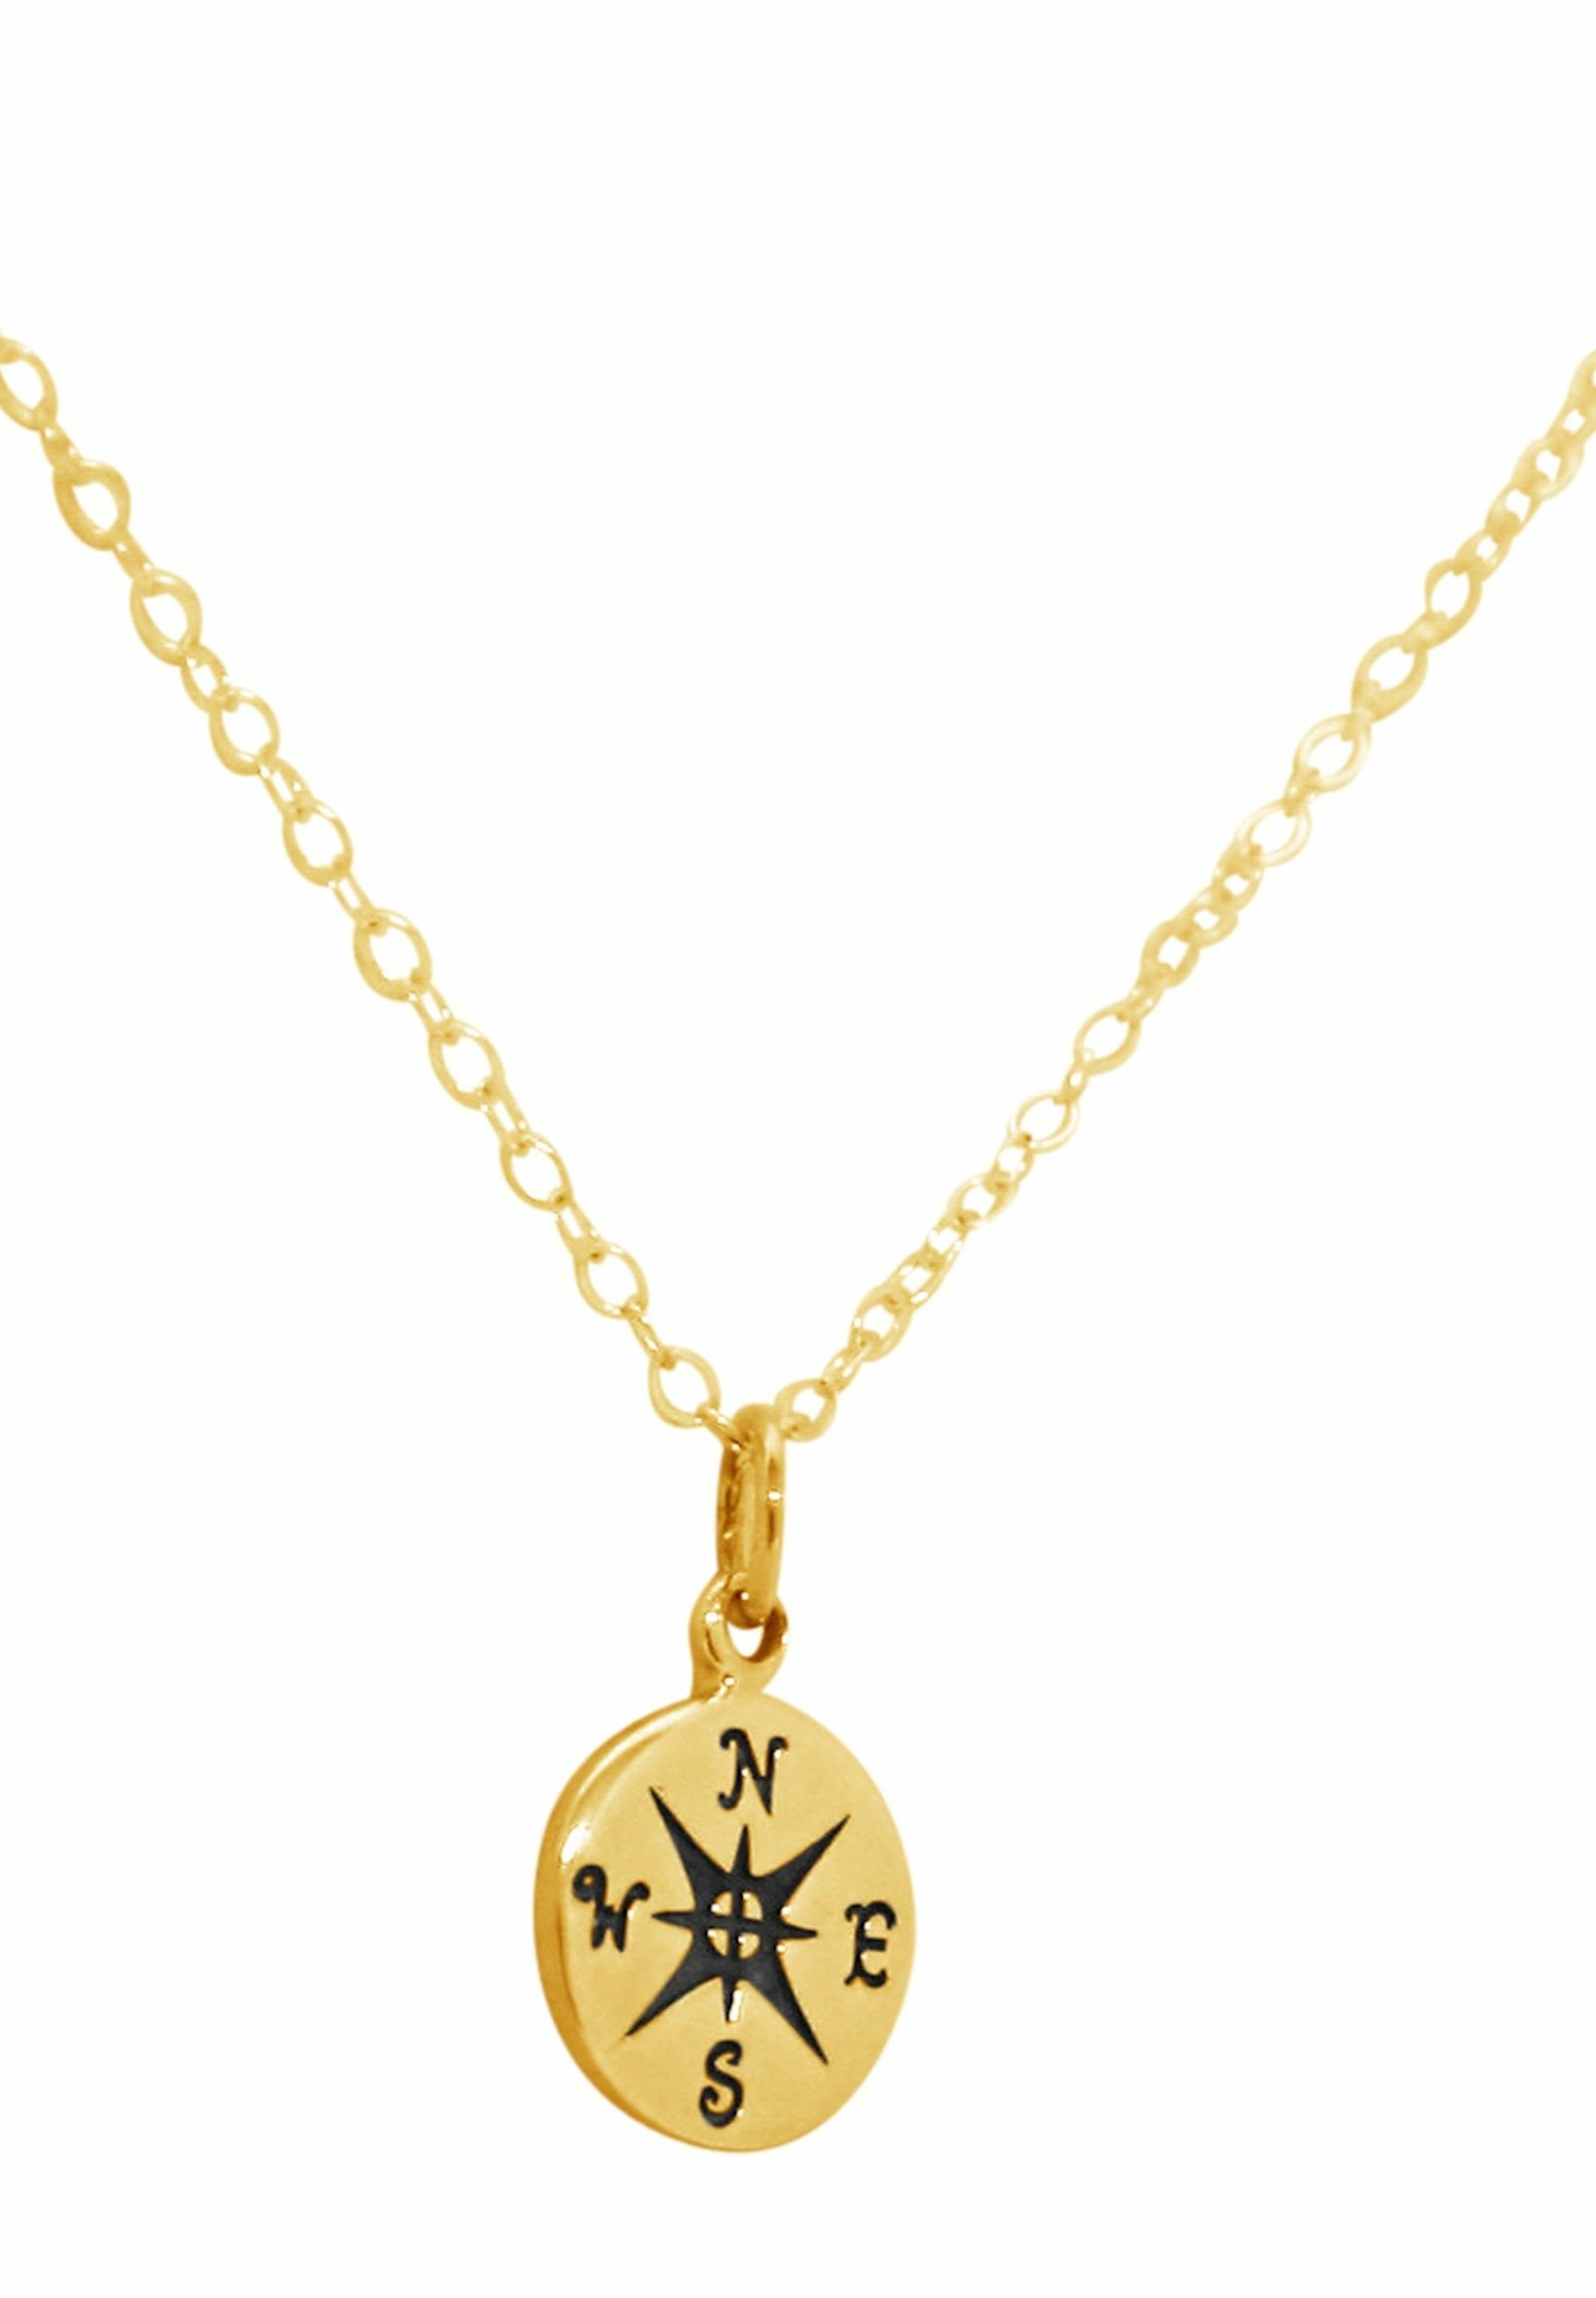 Anhänger Windrose Maritim Nautics Gemshine gold Kompass coloured mit Kette